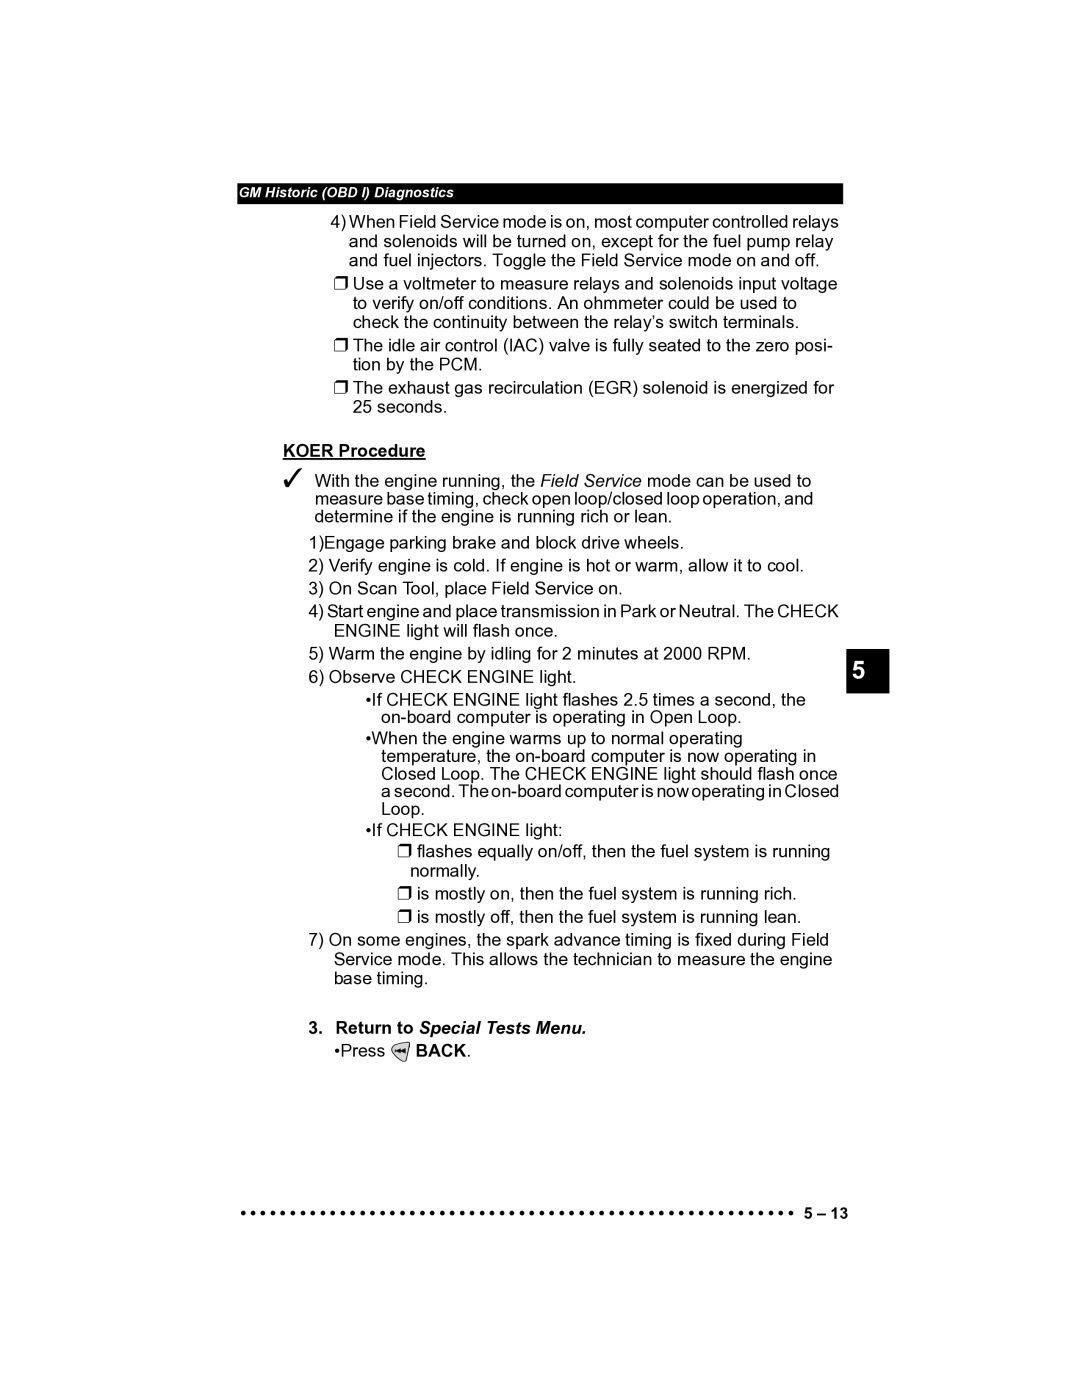 Actron CP9185 manual Koer Procedure, Return to Special Tests Menu. Press Back 